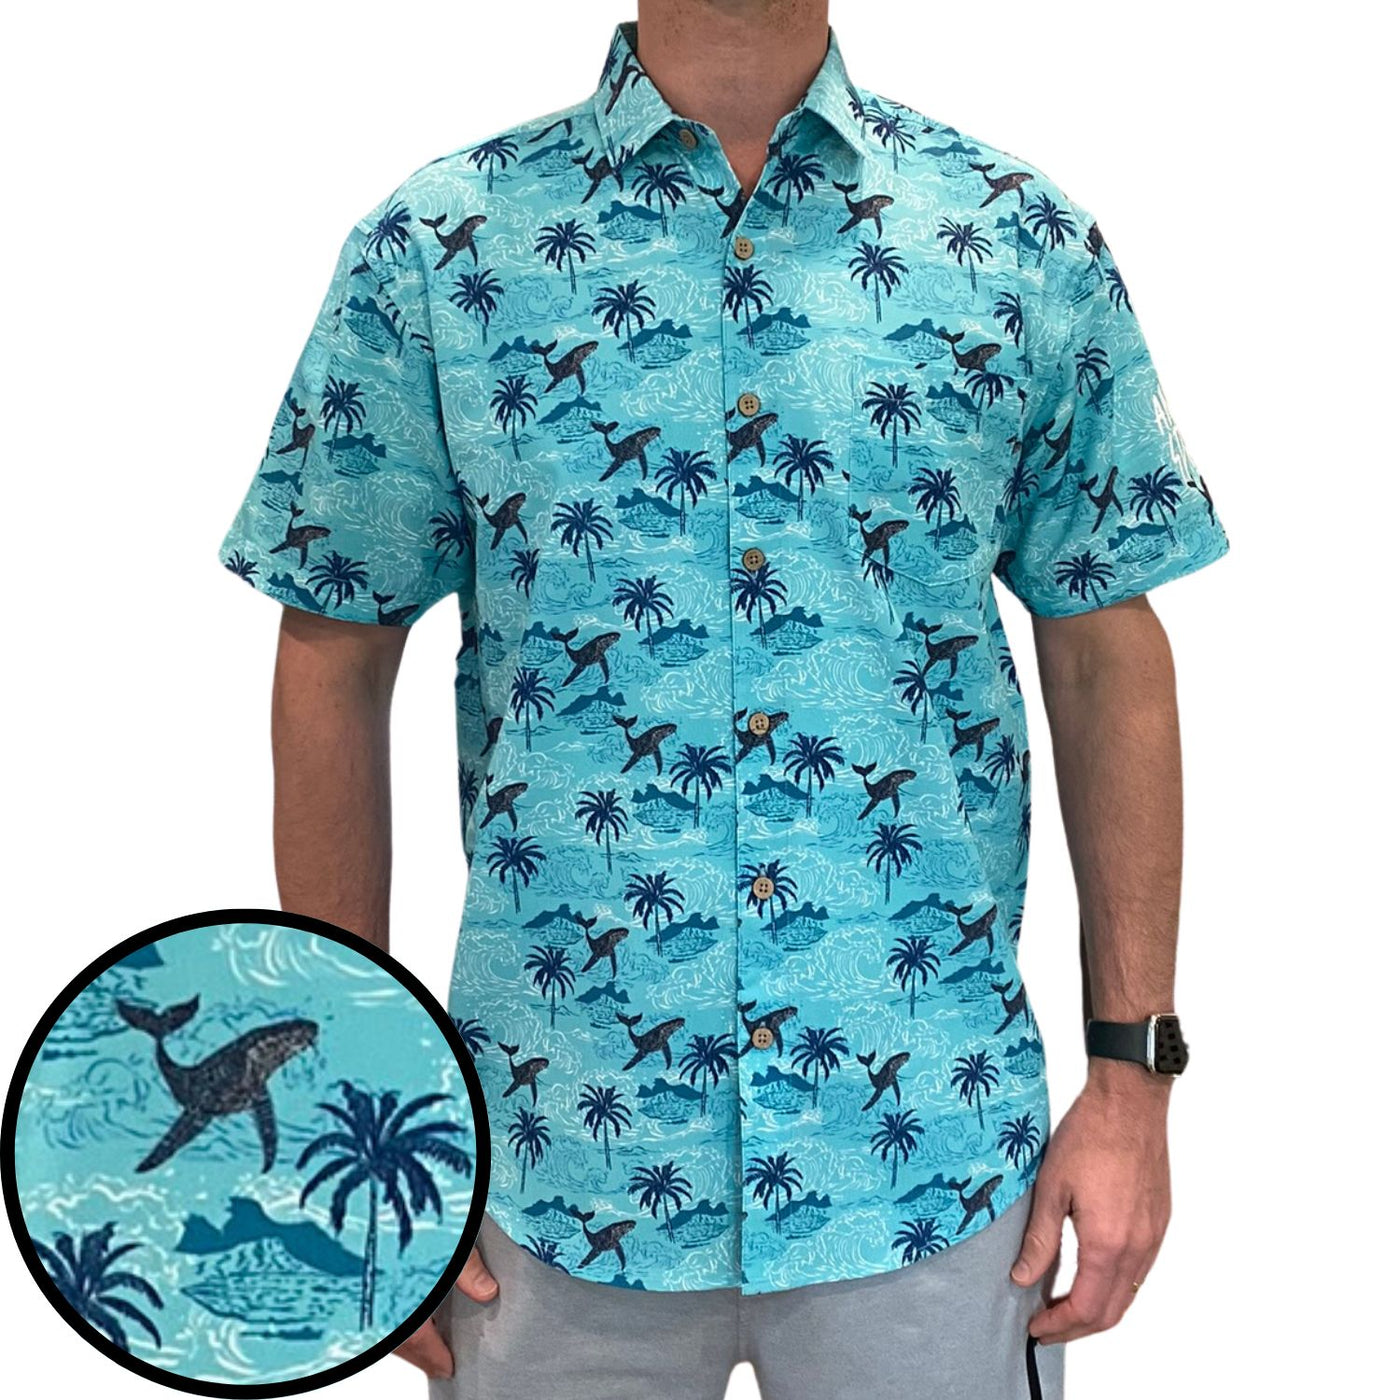 Super Stretch - Animal Spirits Hawaiian Shirt